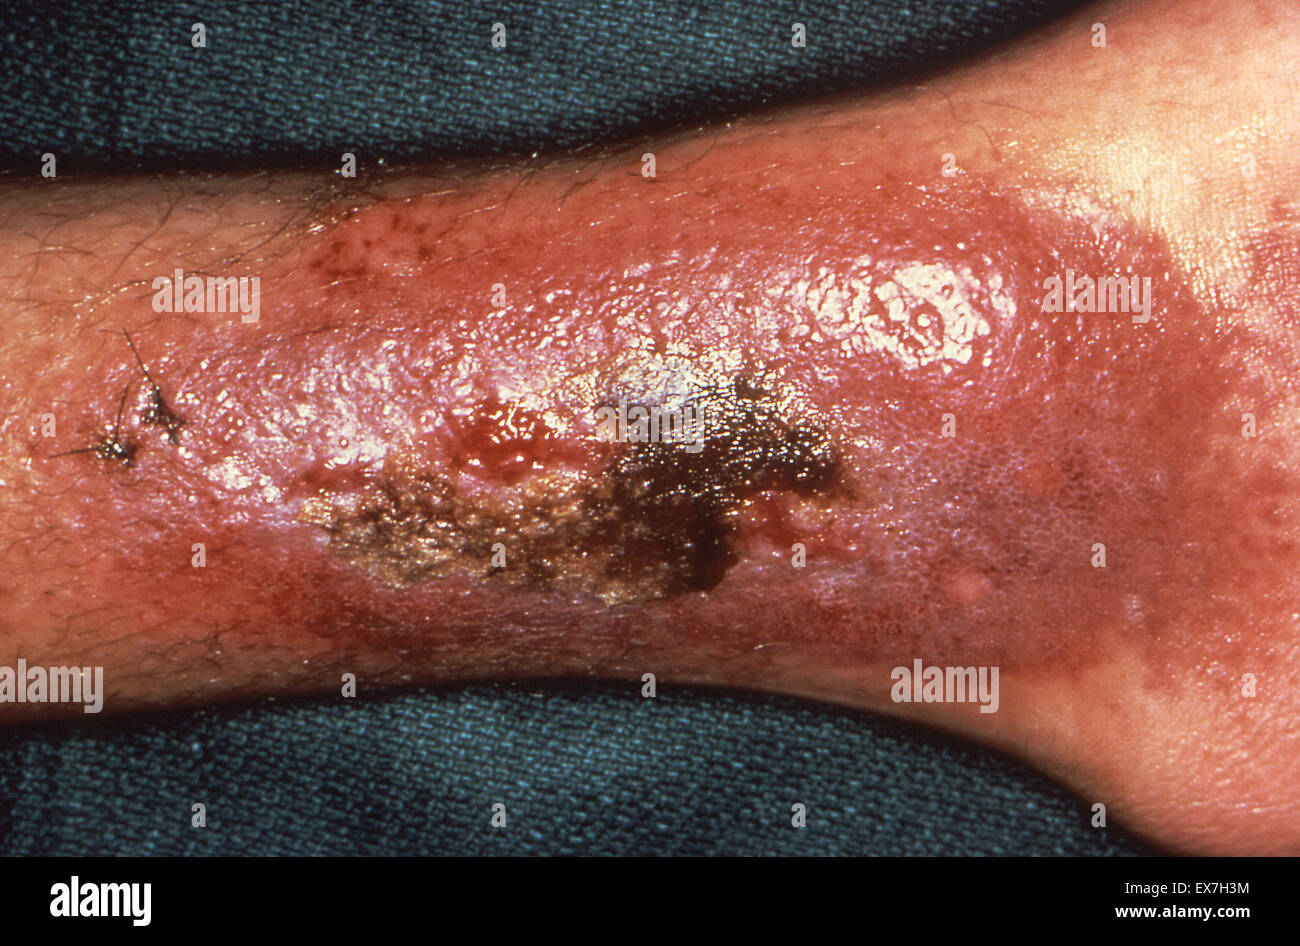 Distal leg and ankle showing a Kaposi’s sarcoma (KS) cutaneous lesion. Stock Photo